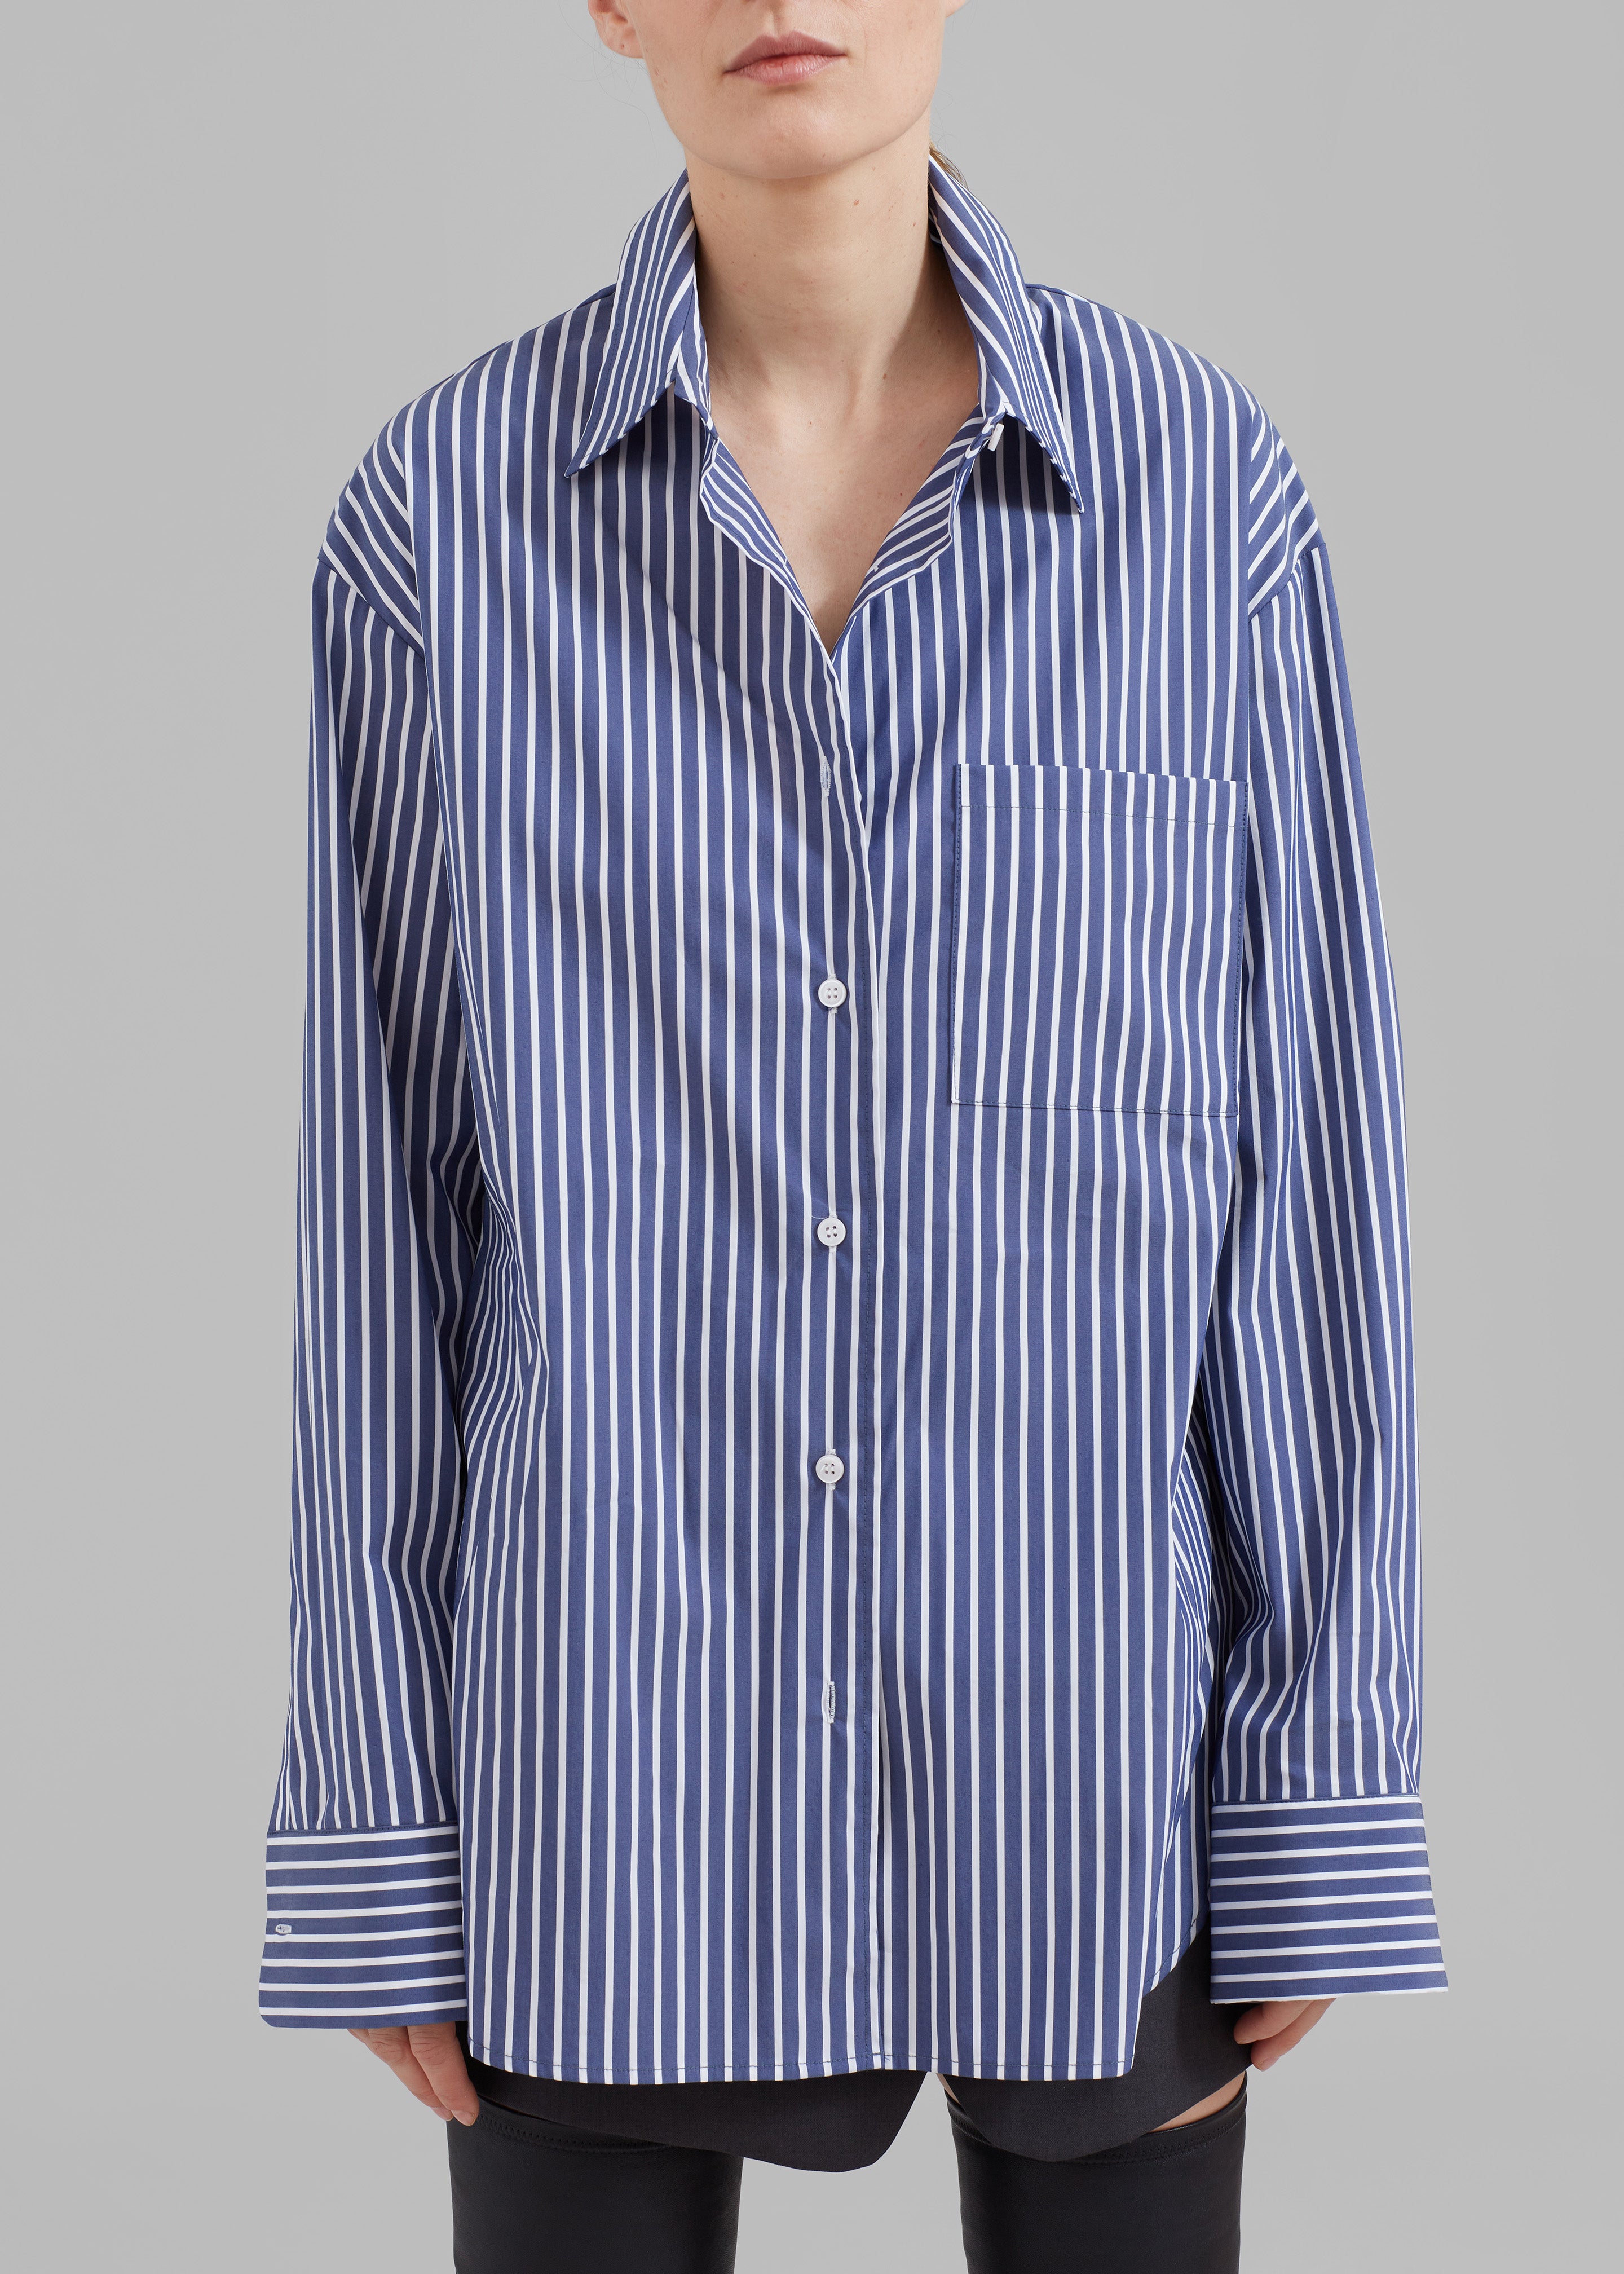 Lui Thin Stripe Shirt - Navy Stripe - 2